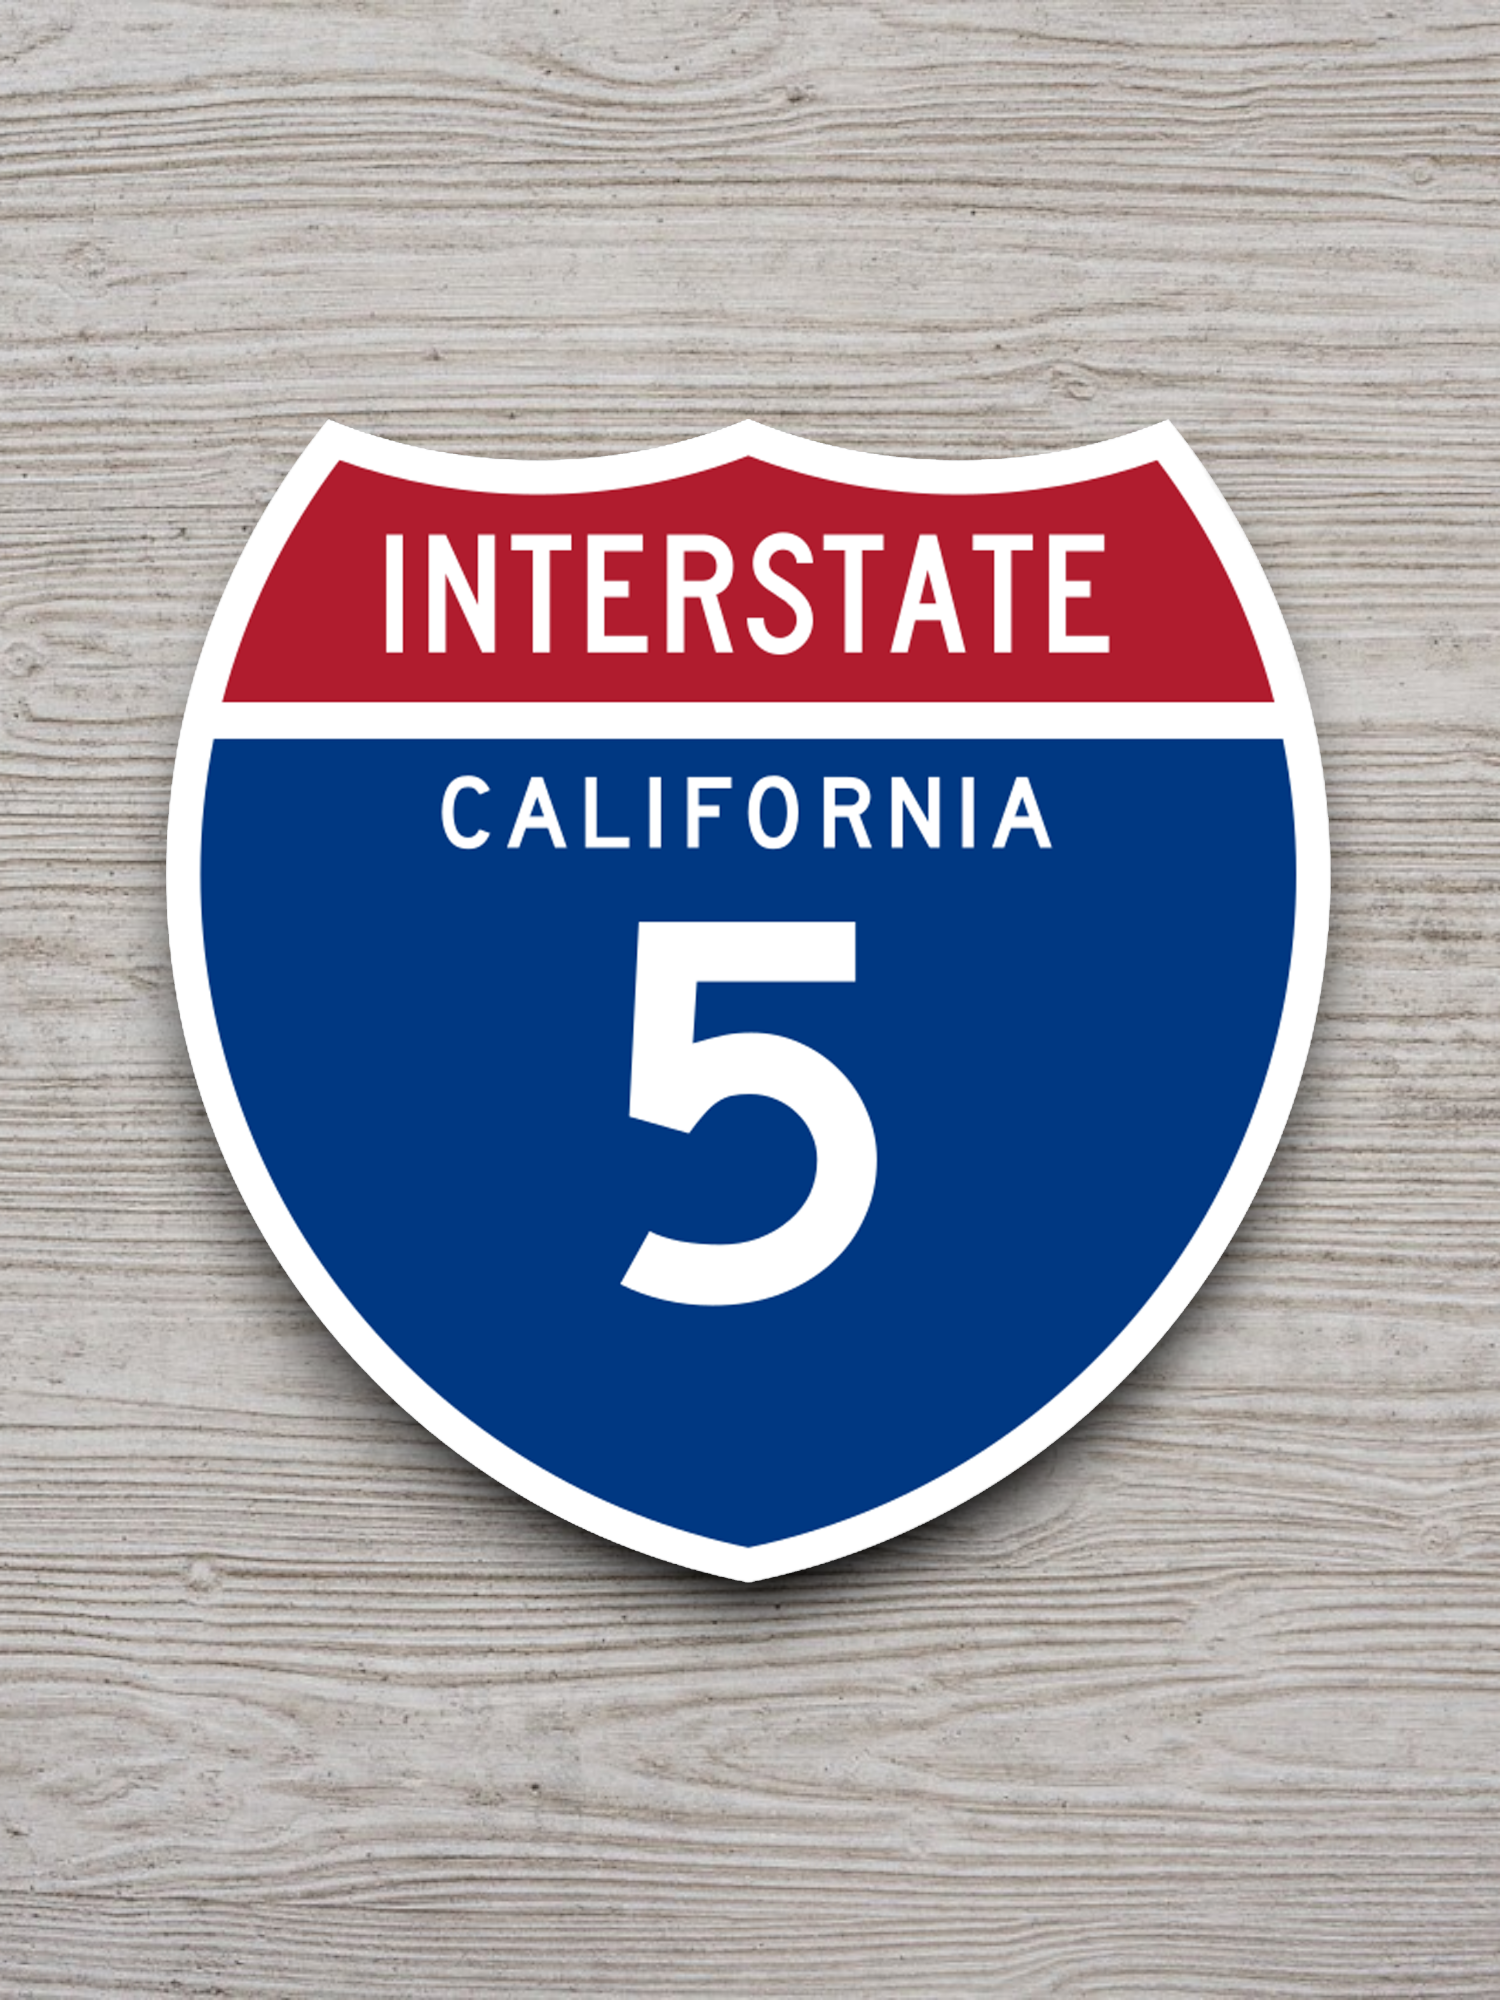 Interstate I-5 California - Road Sign Sticker